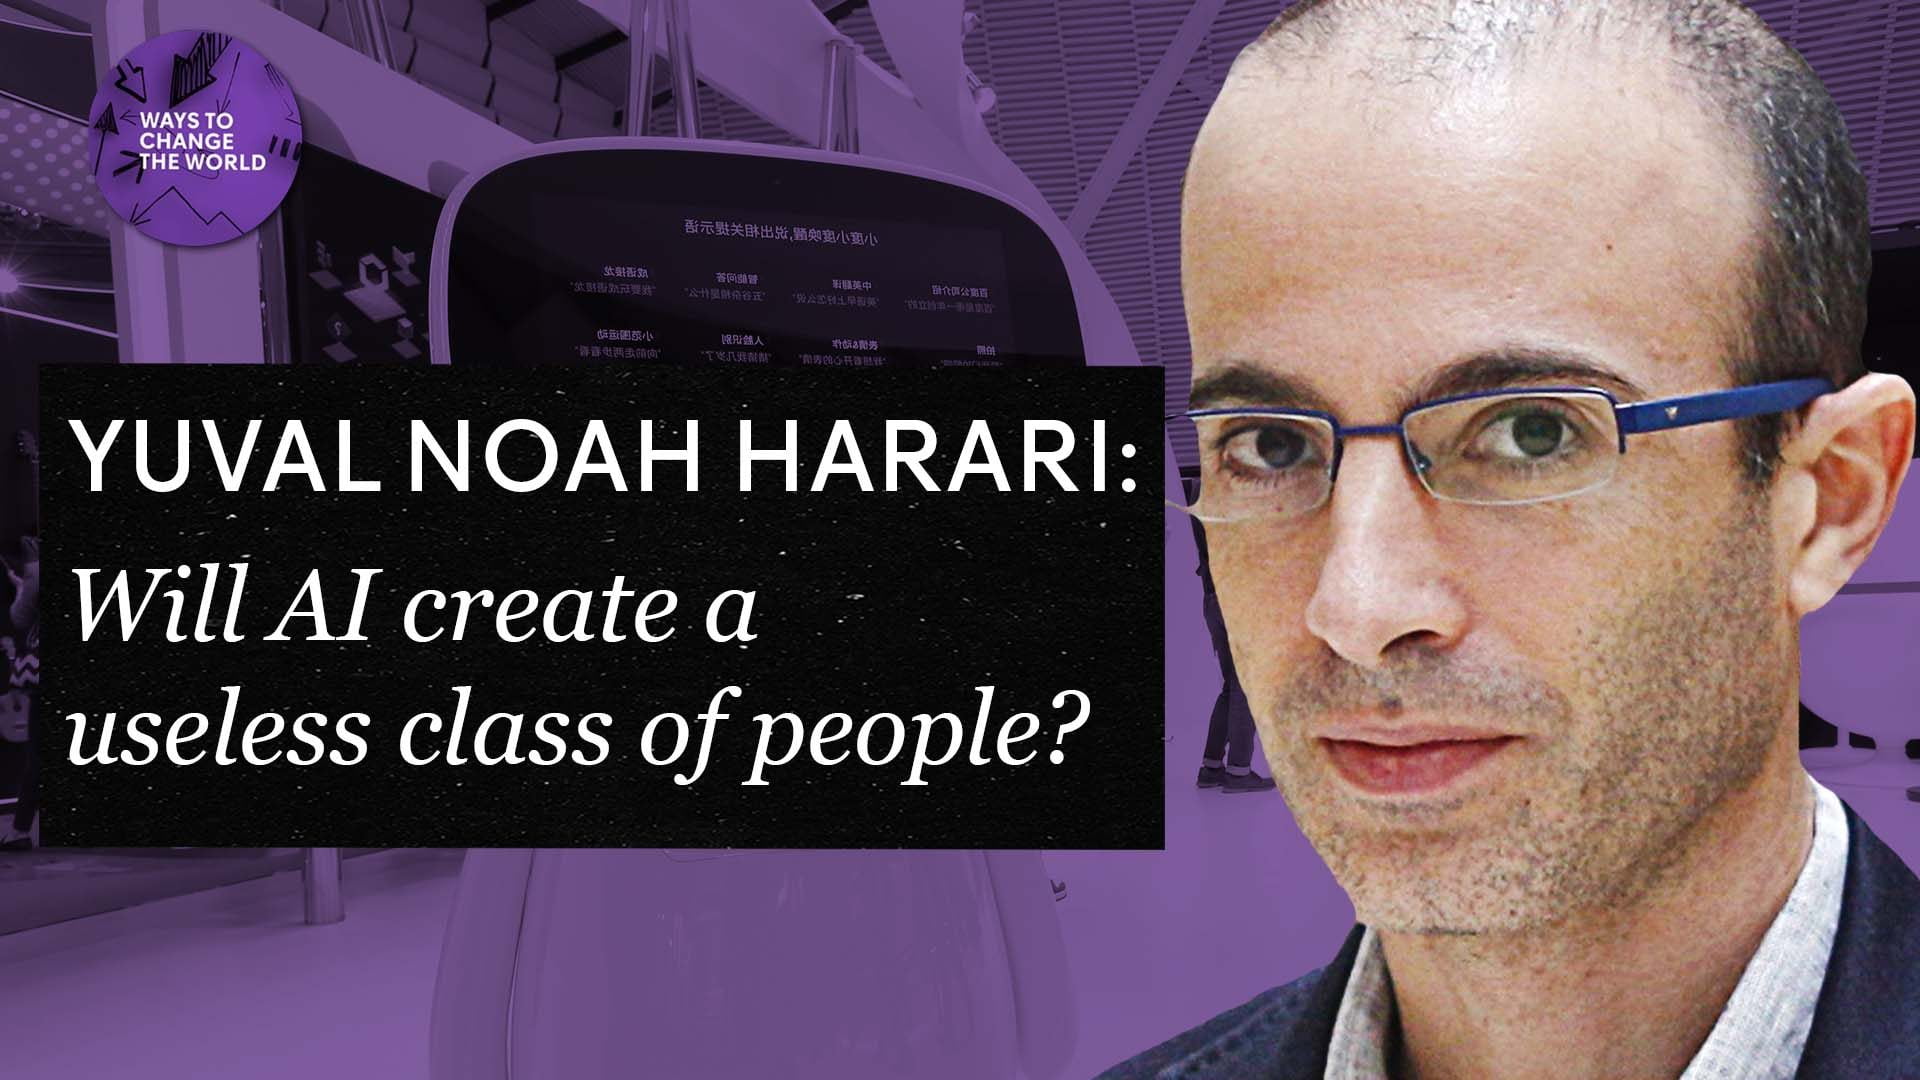 Yuval Noah Harari: Will AI create a useless class of people?